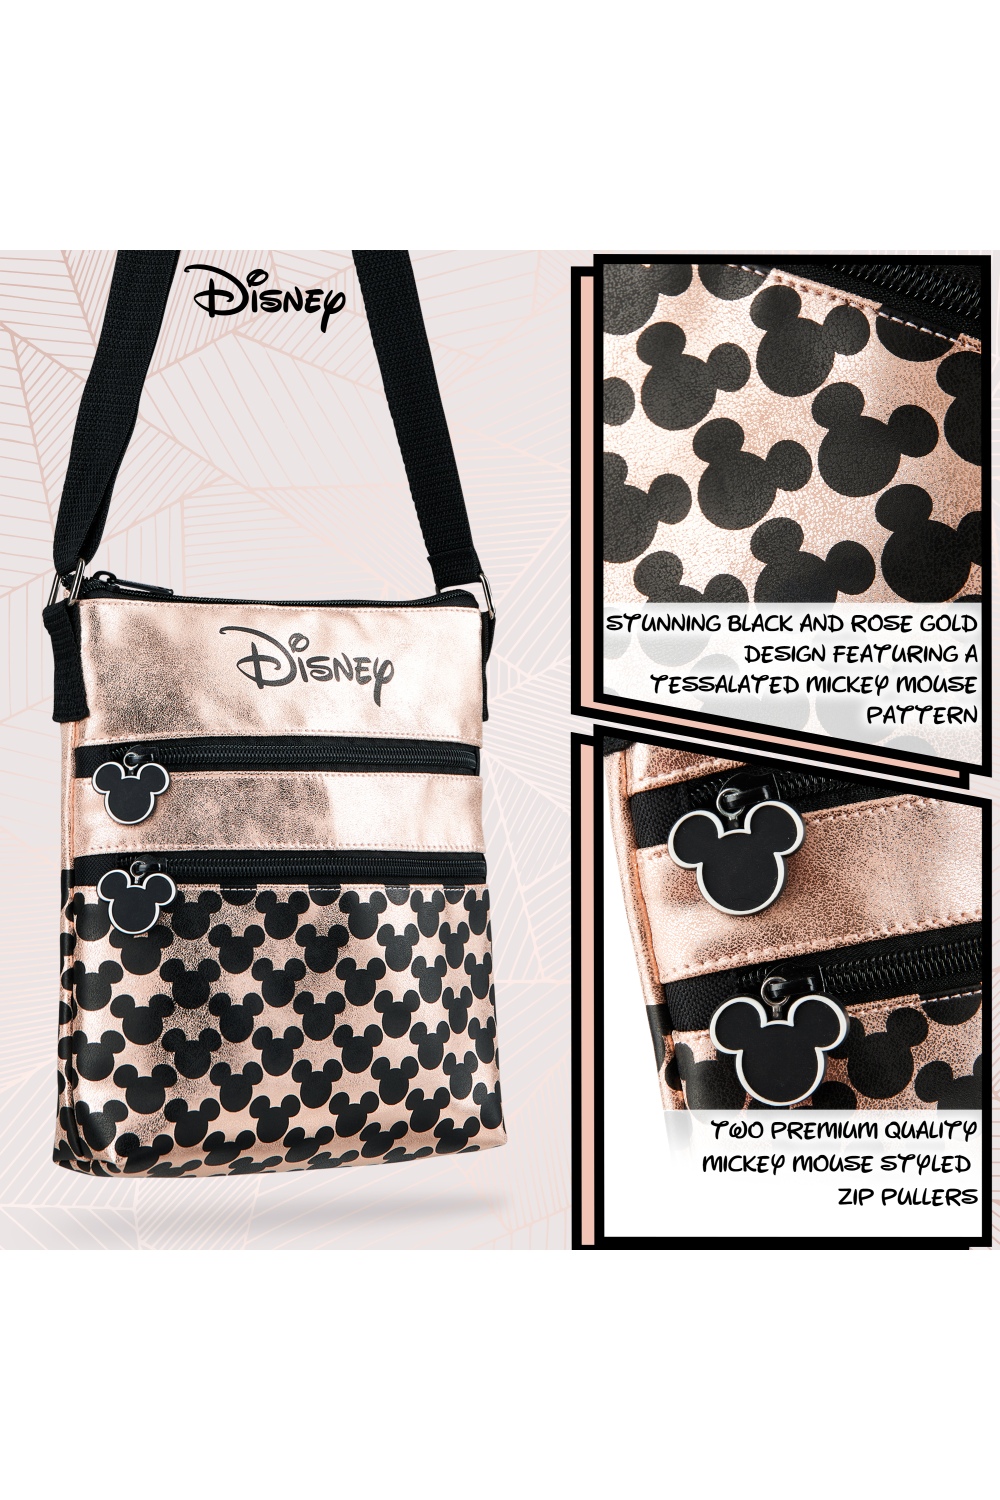 Disney Rose Gold Cross Body Bag for Women, Shoulder Bag, Disney